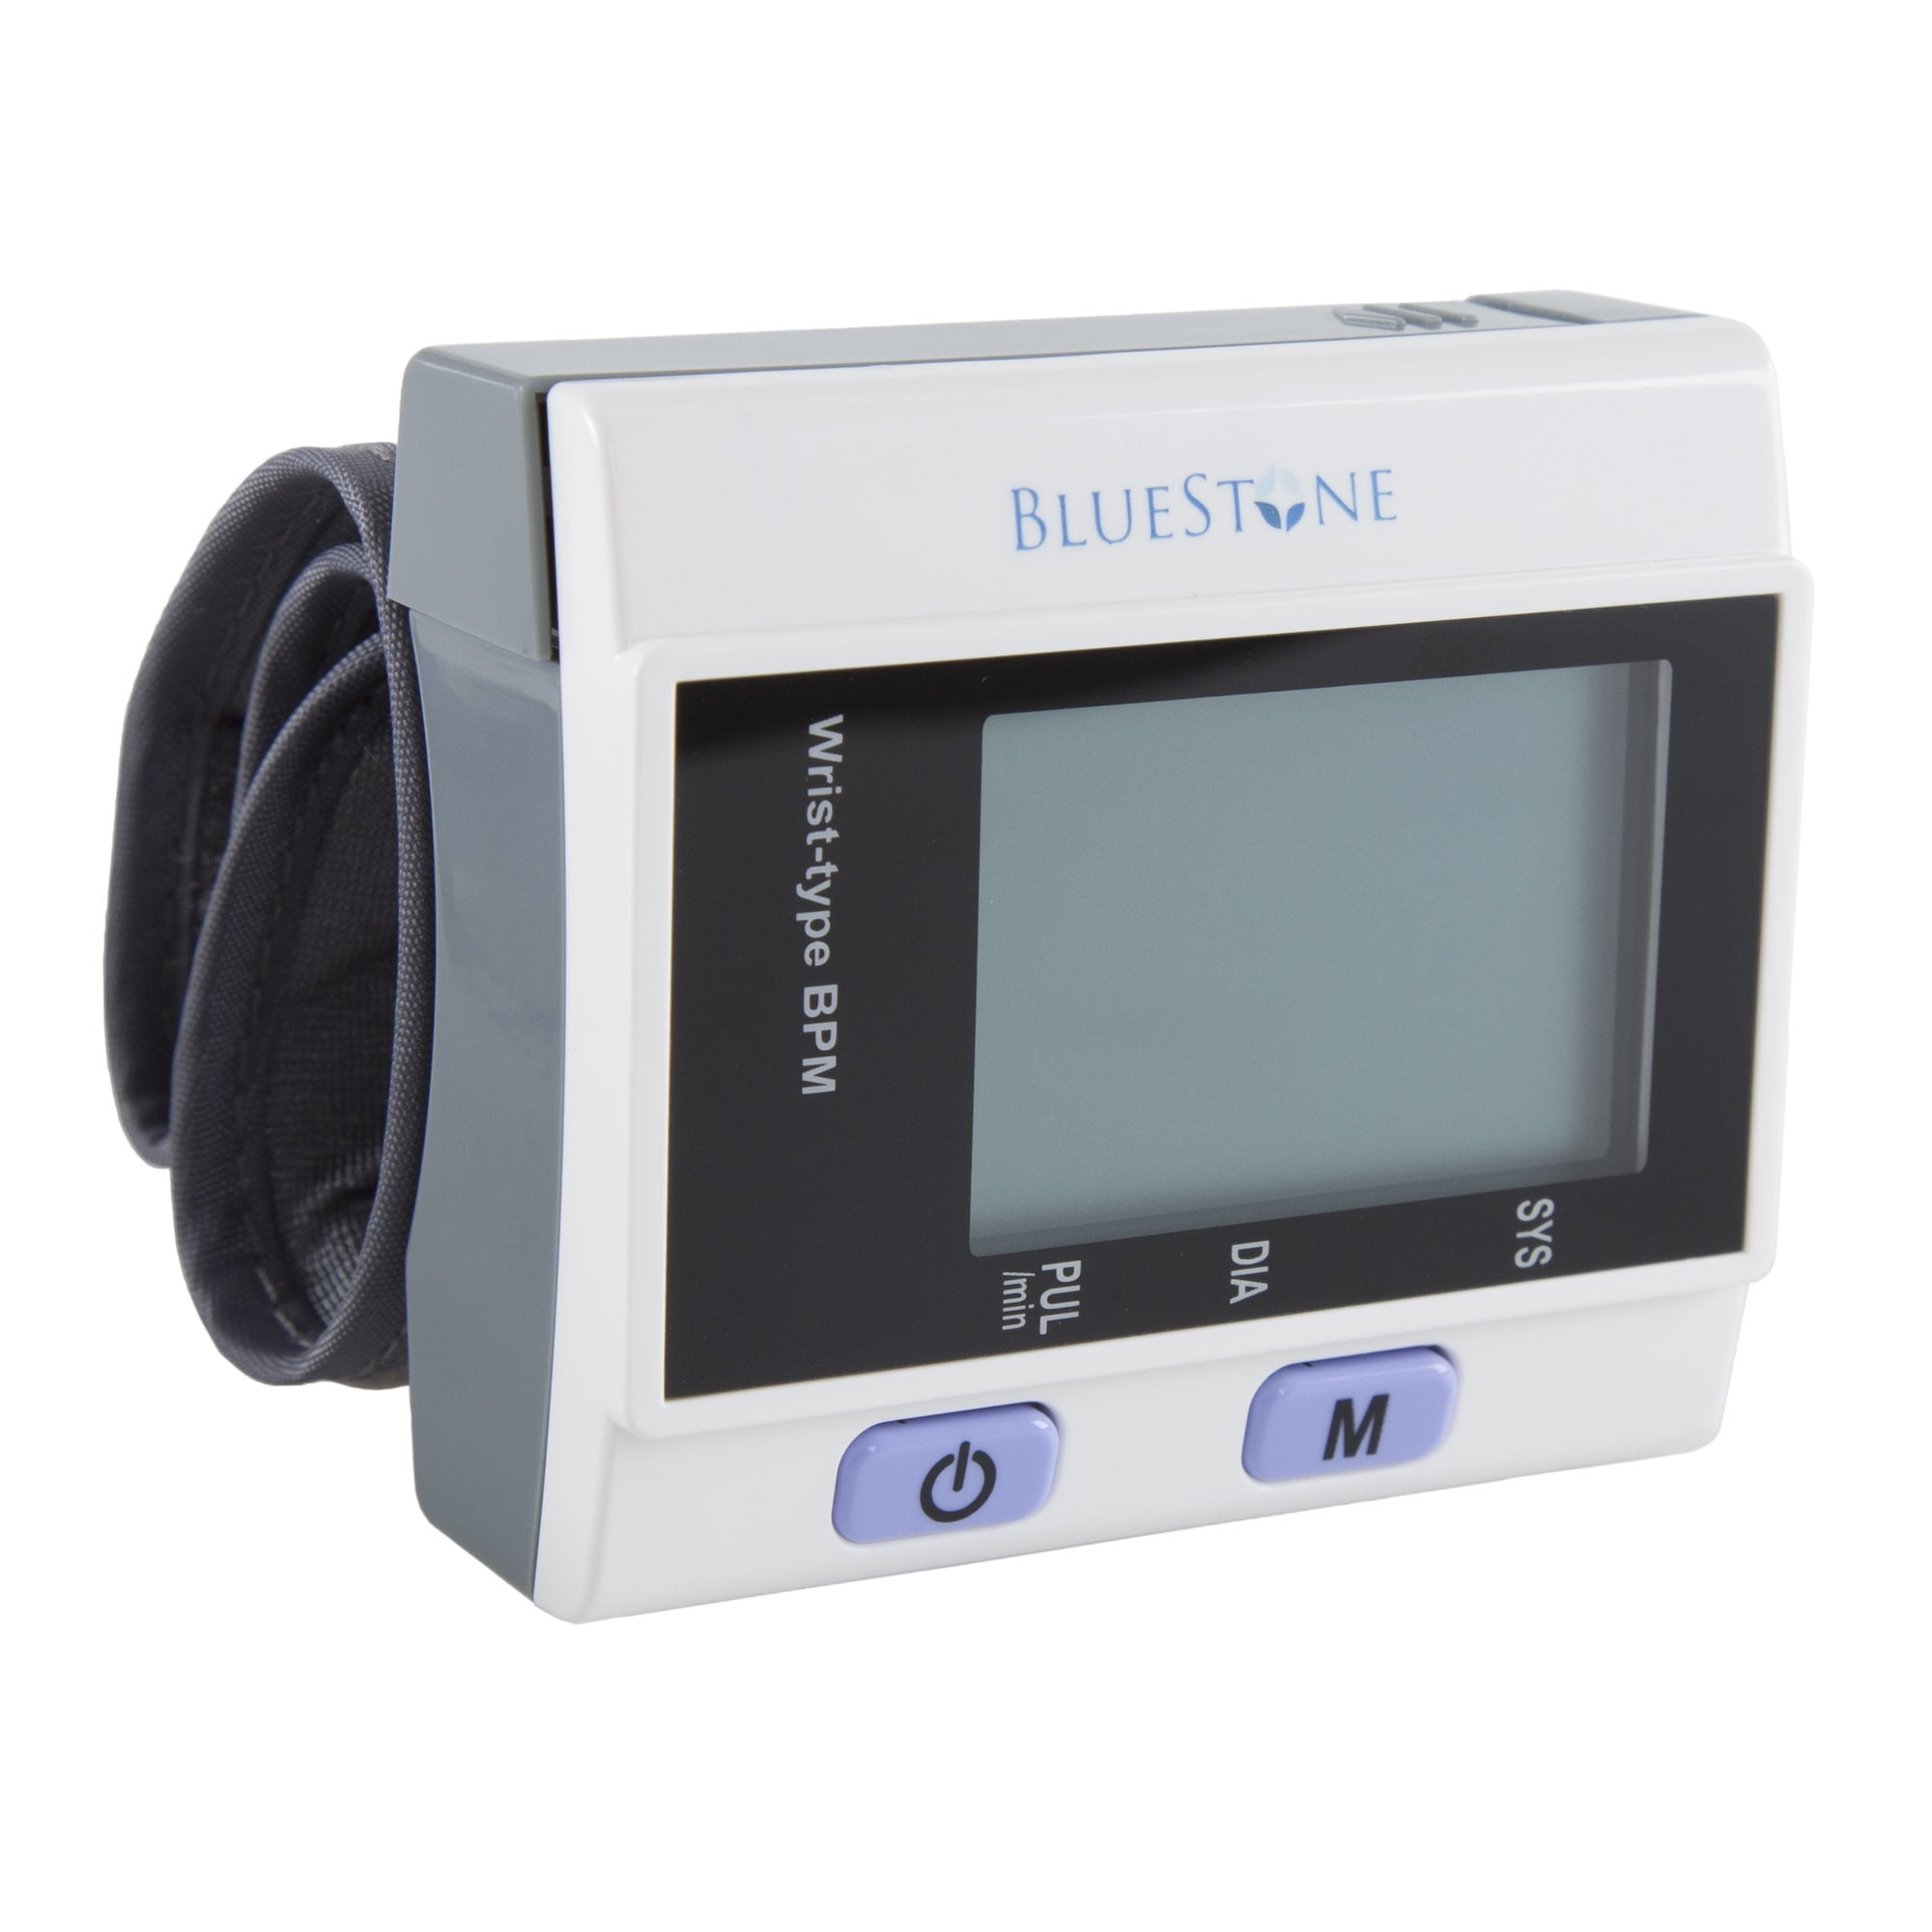 Bluestone 80-5103 LCD Blood Pressure Monitor for sale online